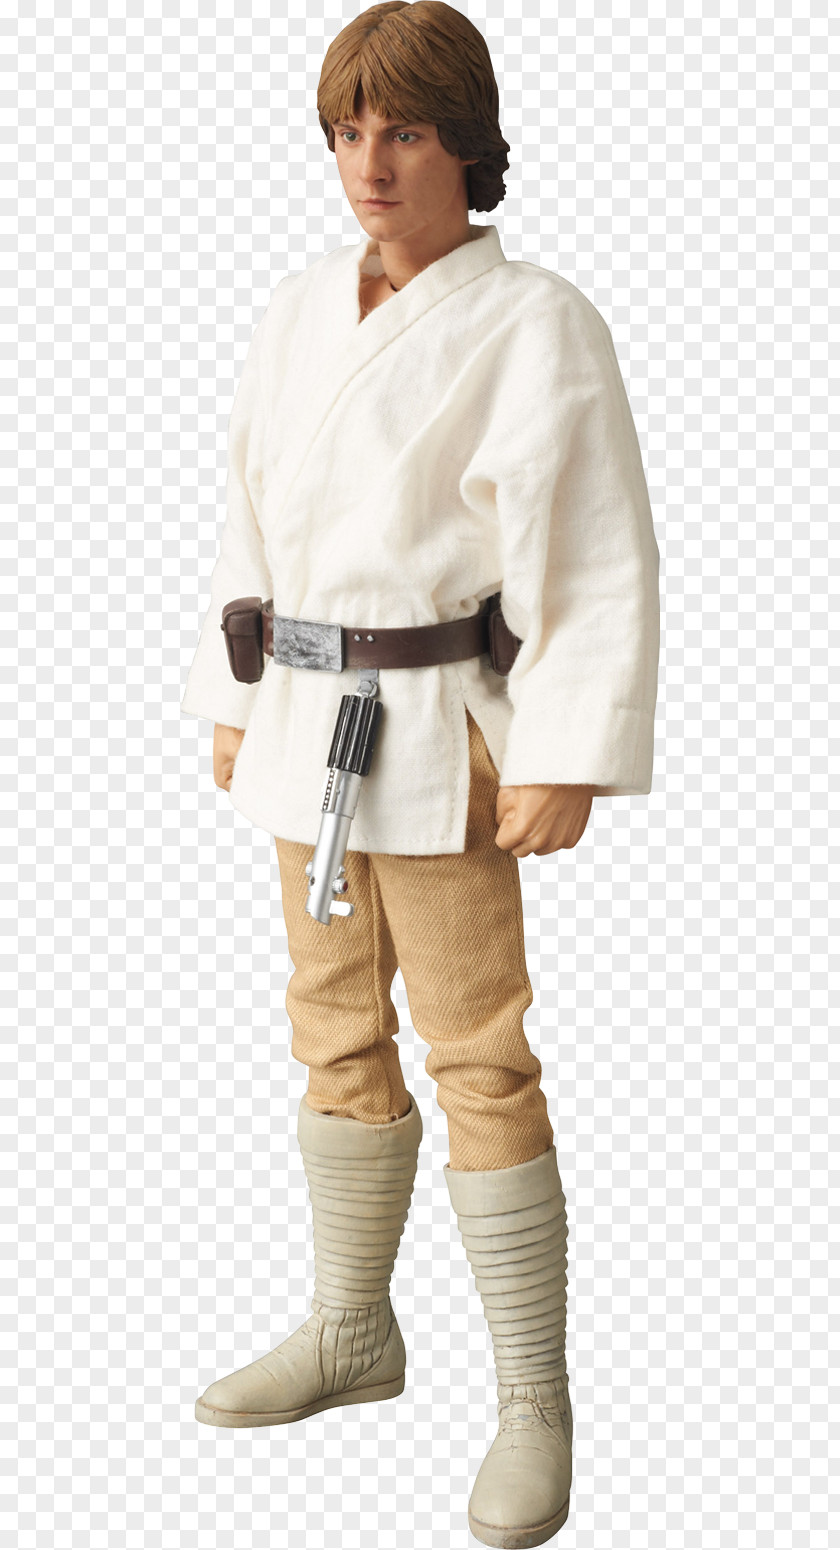 Star Wars Luke Skywalker Yoda Action & Toy Figures Medicom PNG